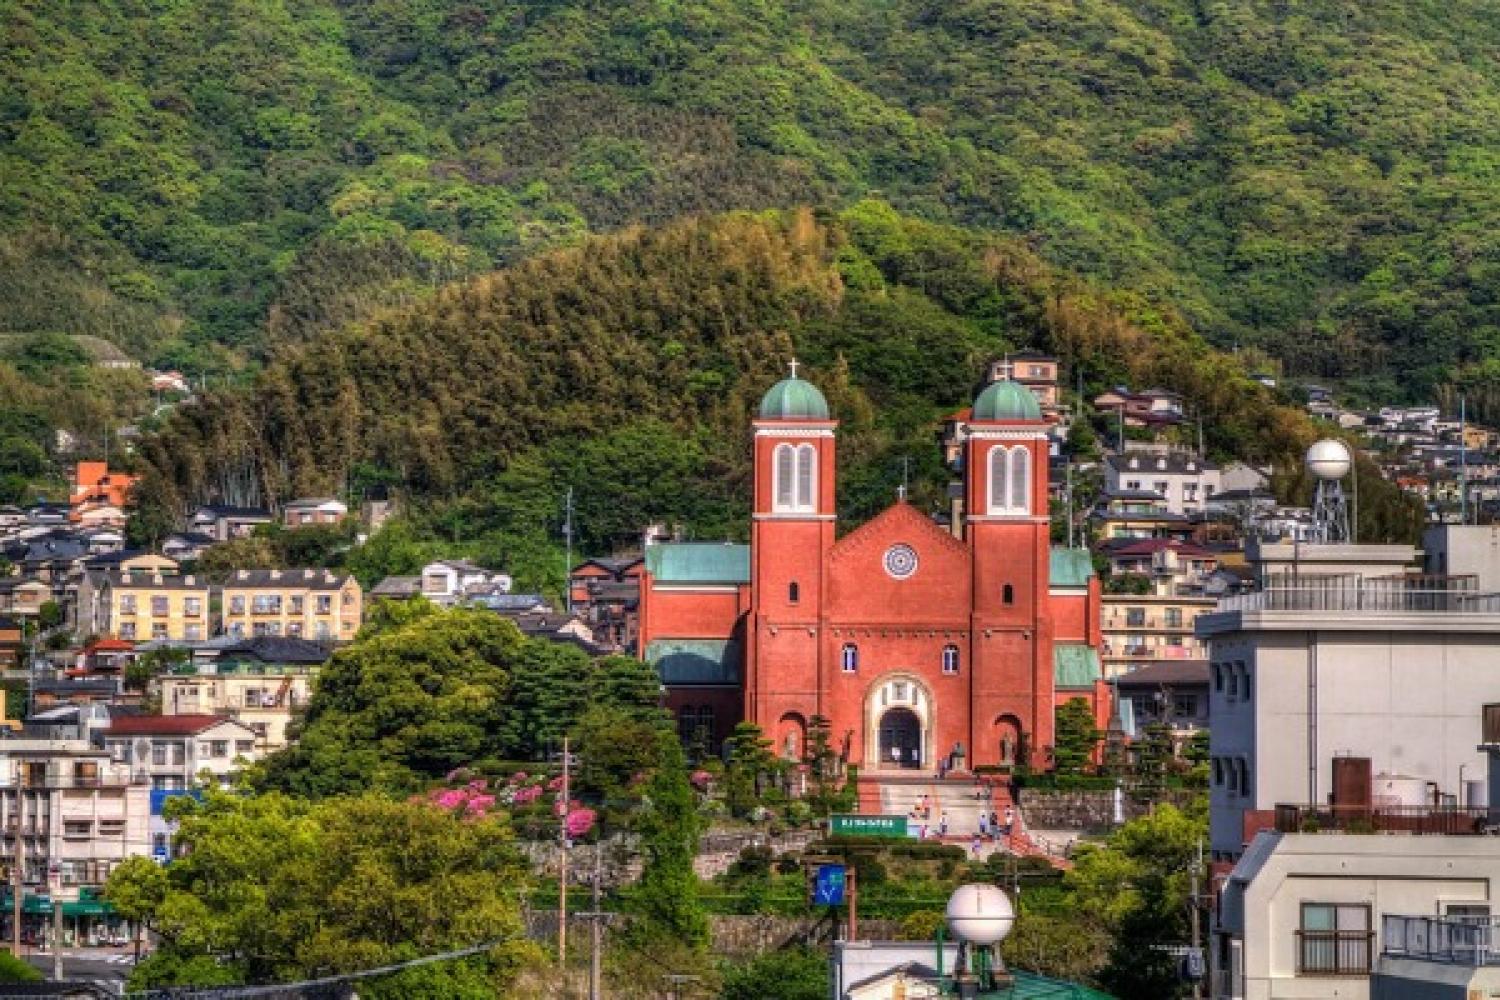 Immaculate Conception Cathedral amongst the rebuilt Urakami neighborhood of Nagasaki